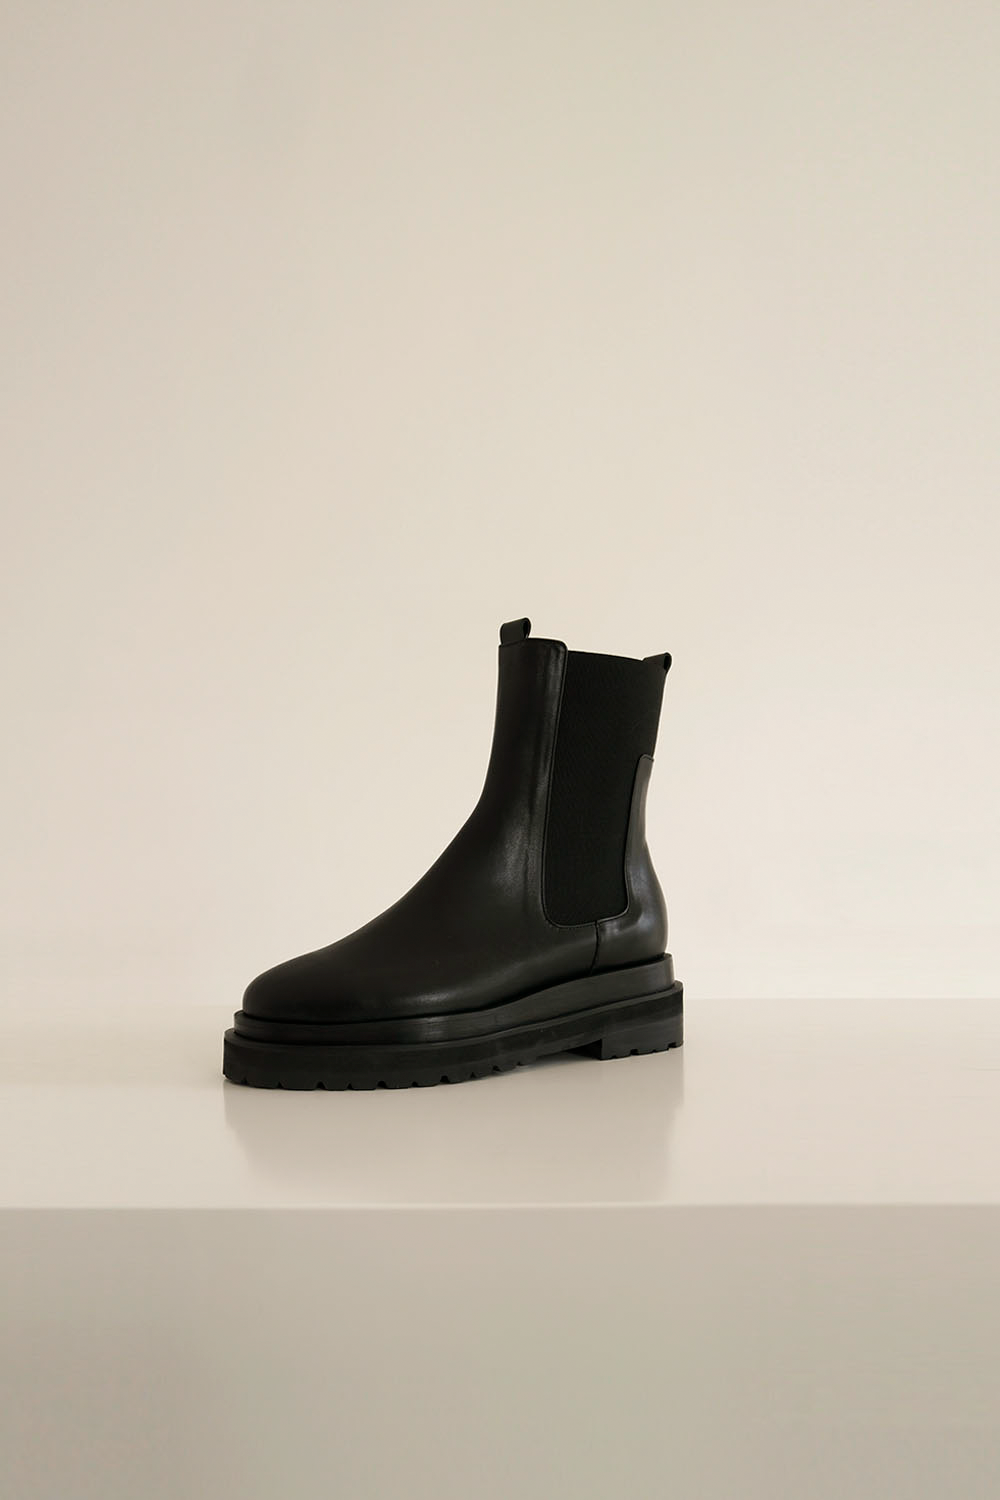 ANTHÈSE avenir chelsea boots, black